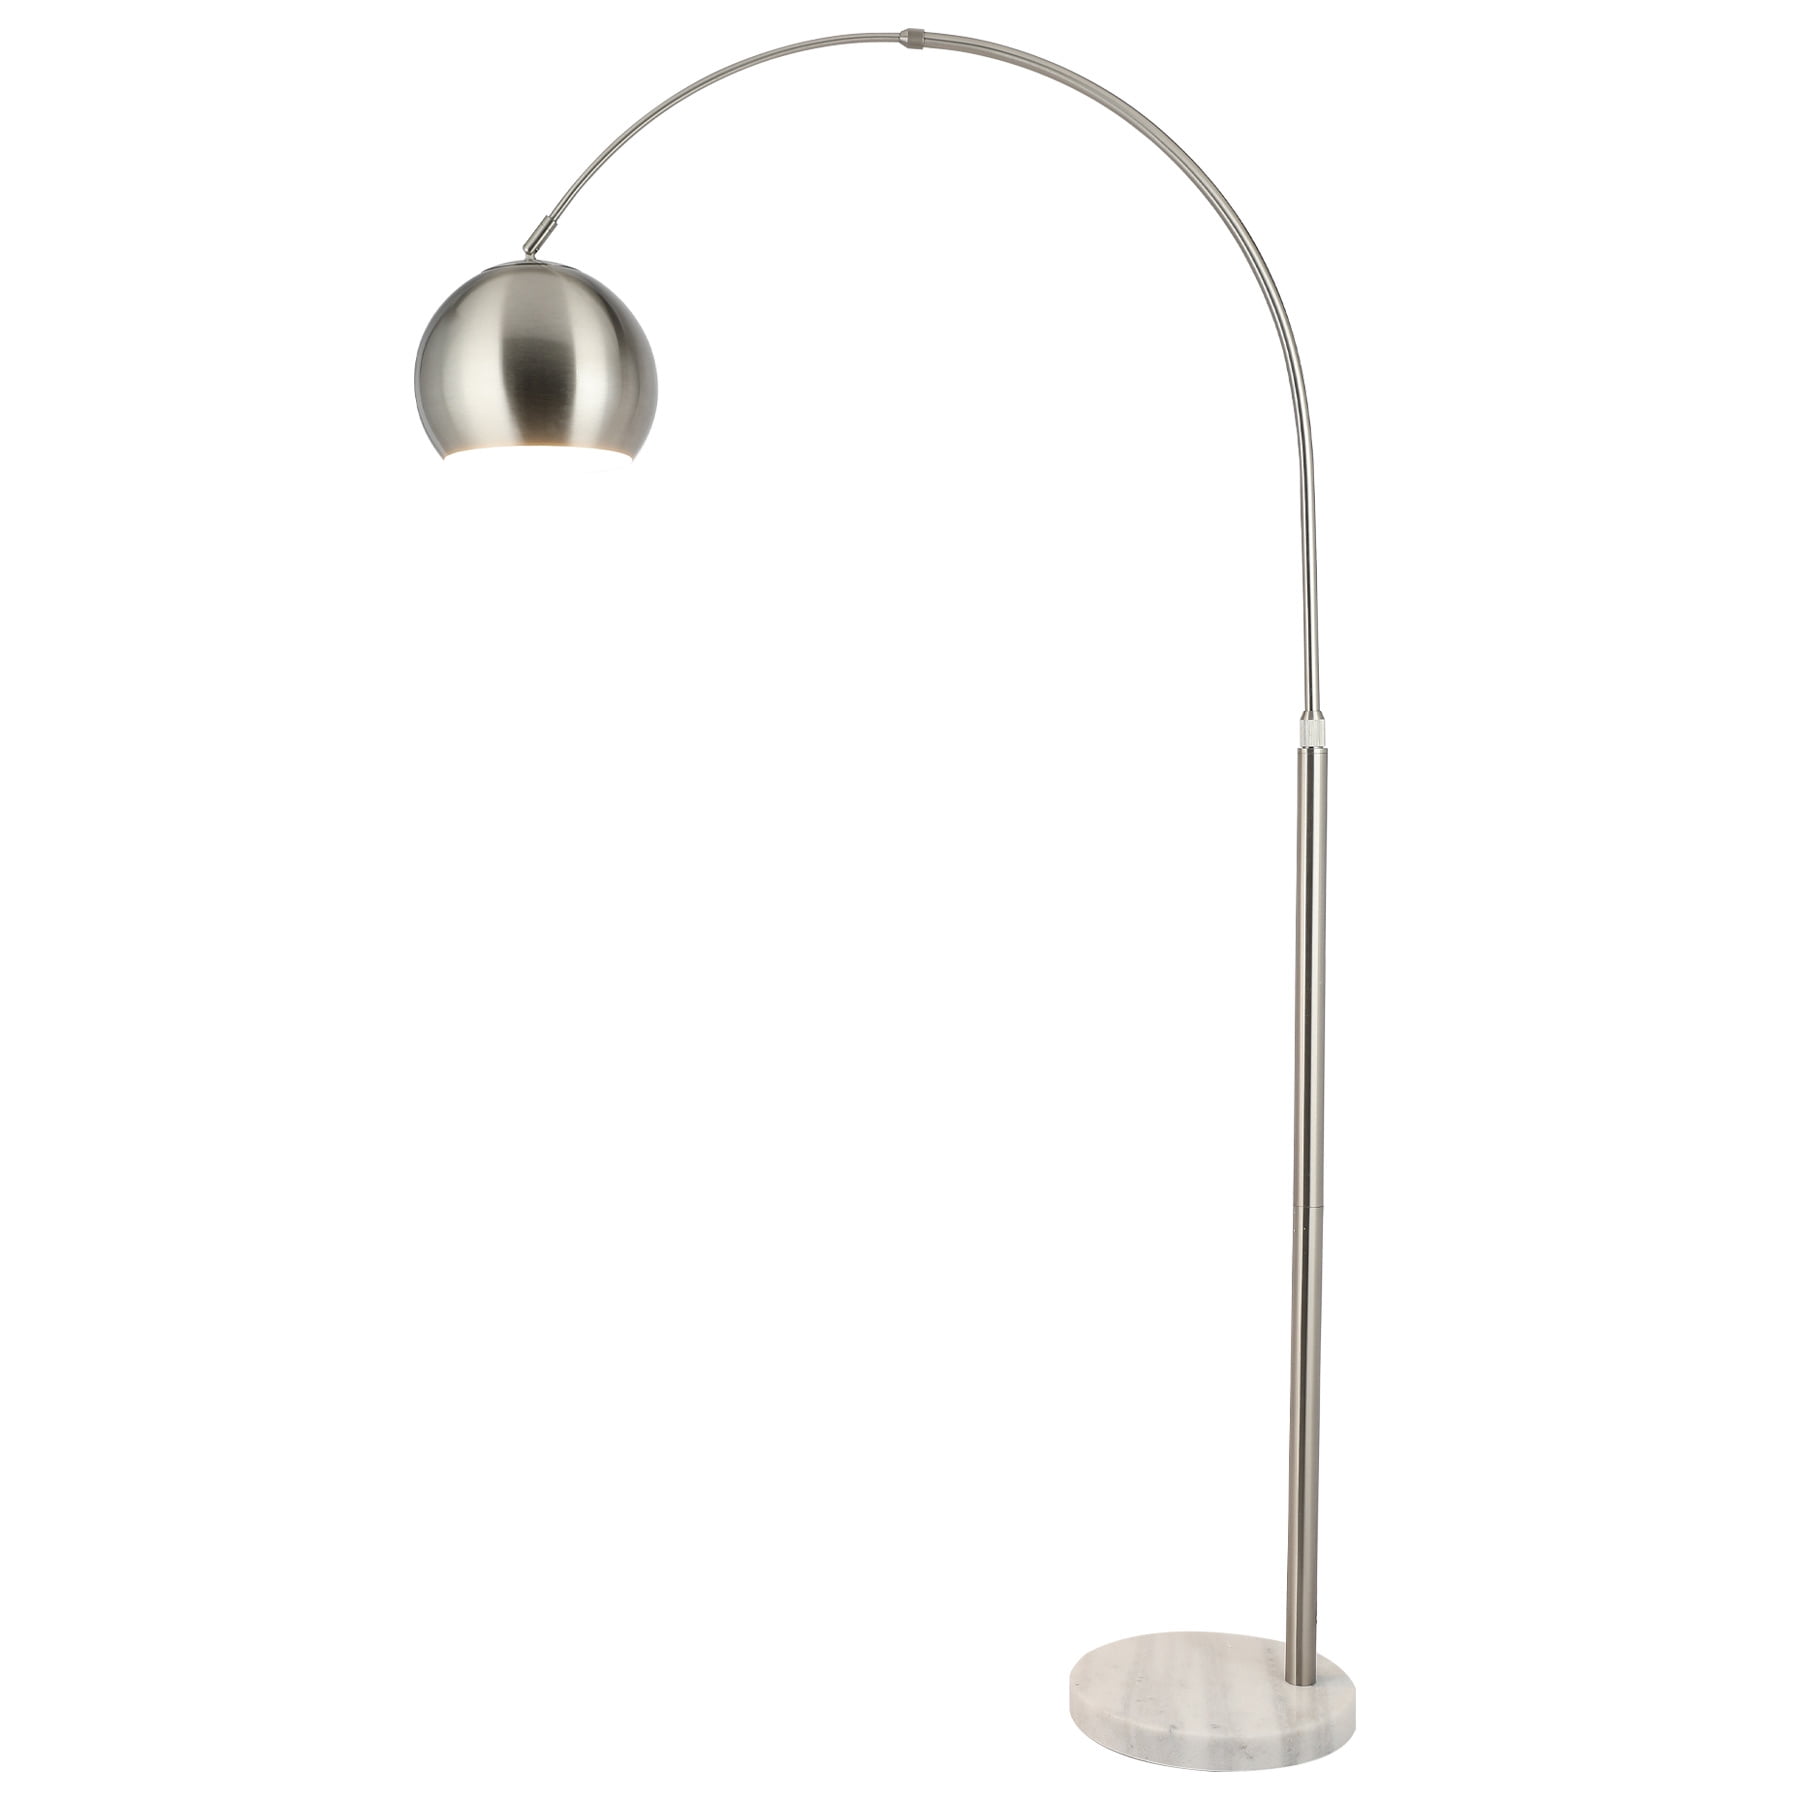 Modern Arc Floor Lamps For Living Room - 5 Light Floor Lamp Shades ...